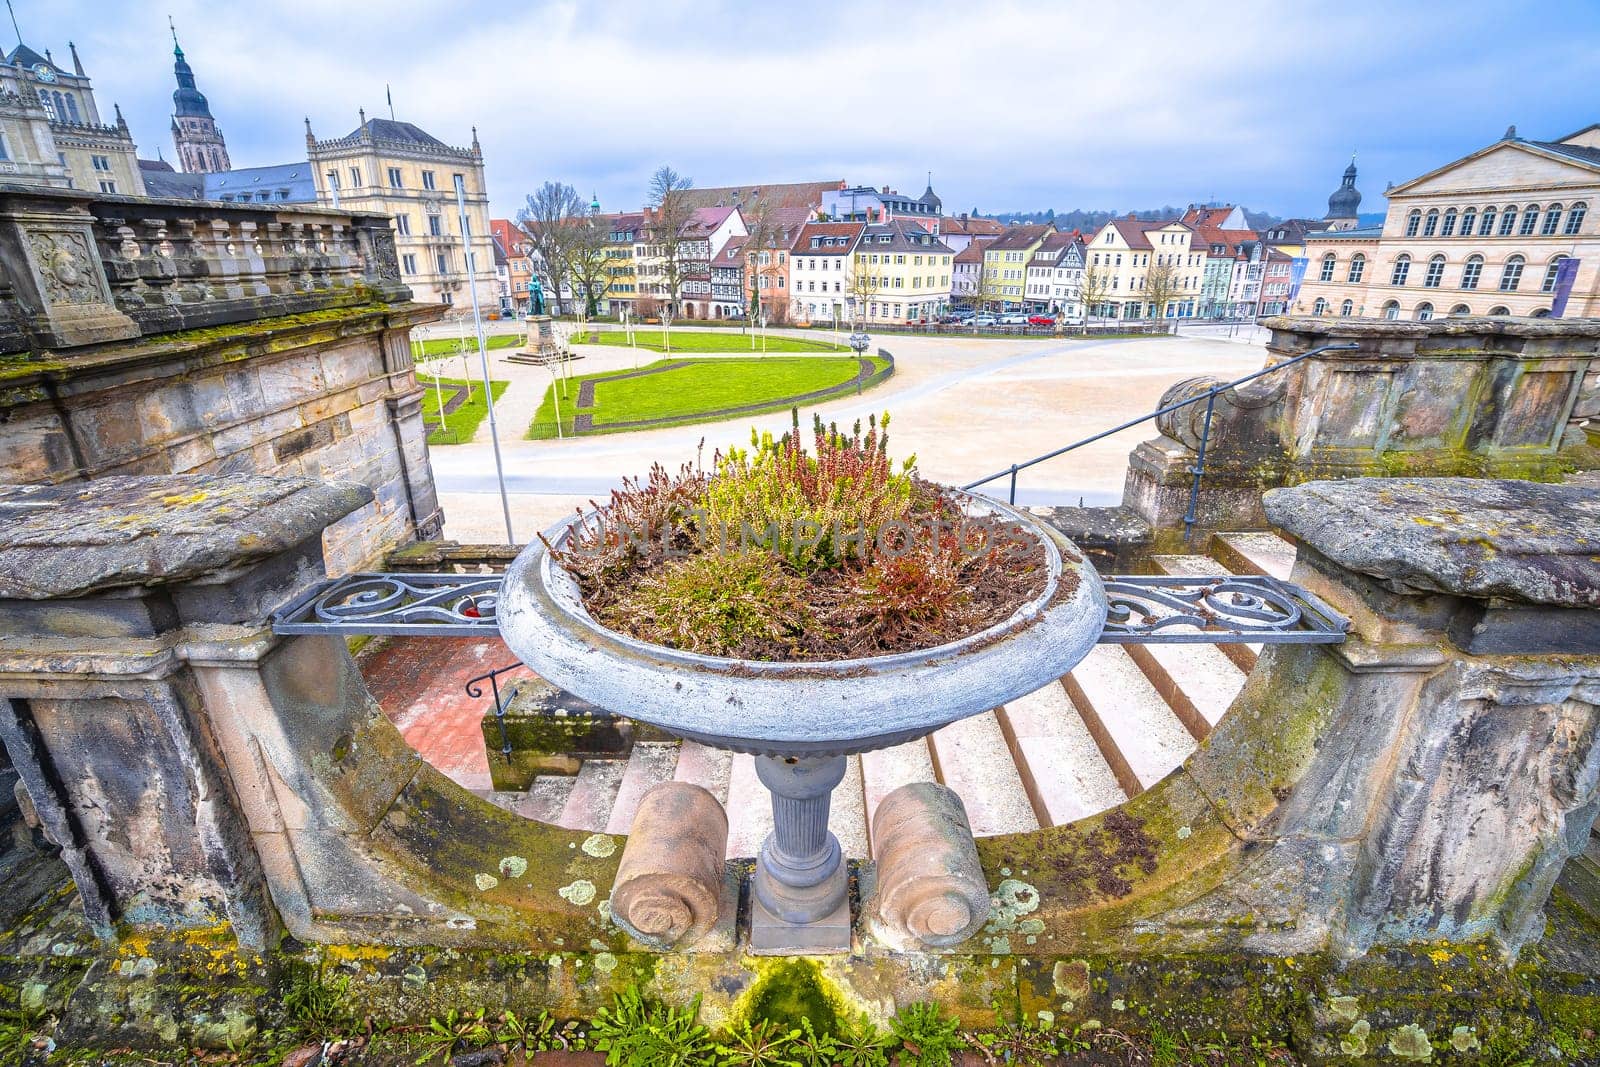 Historic Schlossplatz sqaure in Coburg architecture view, Upper Franconia region of Bavaria, Germany.